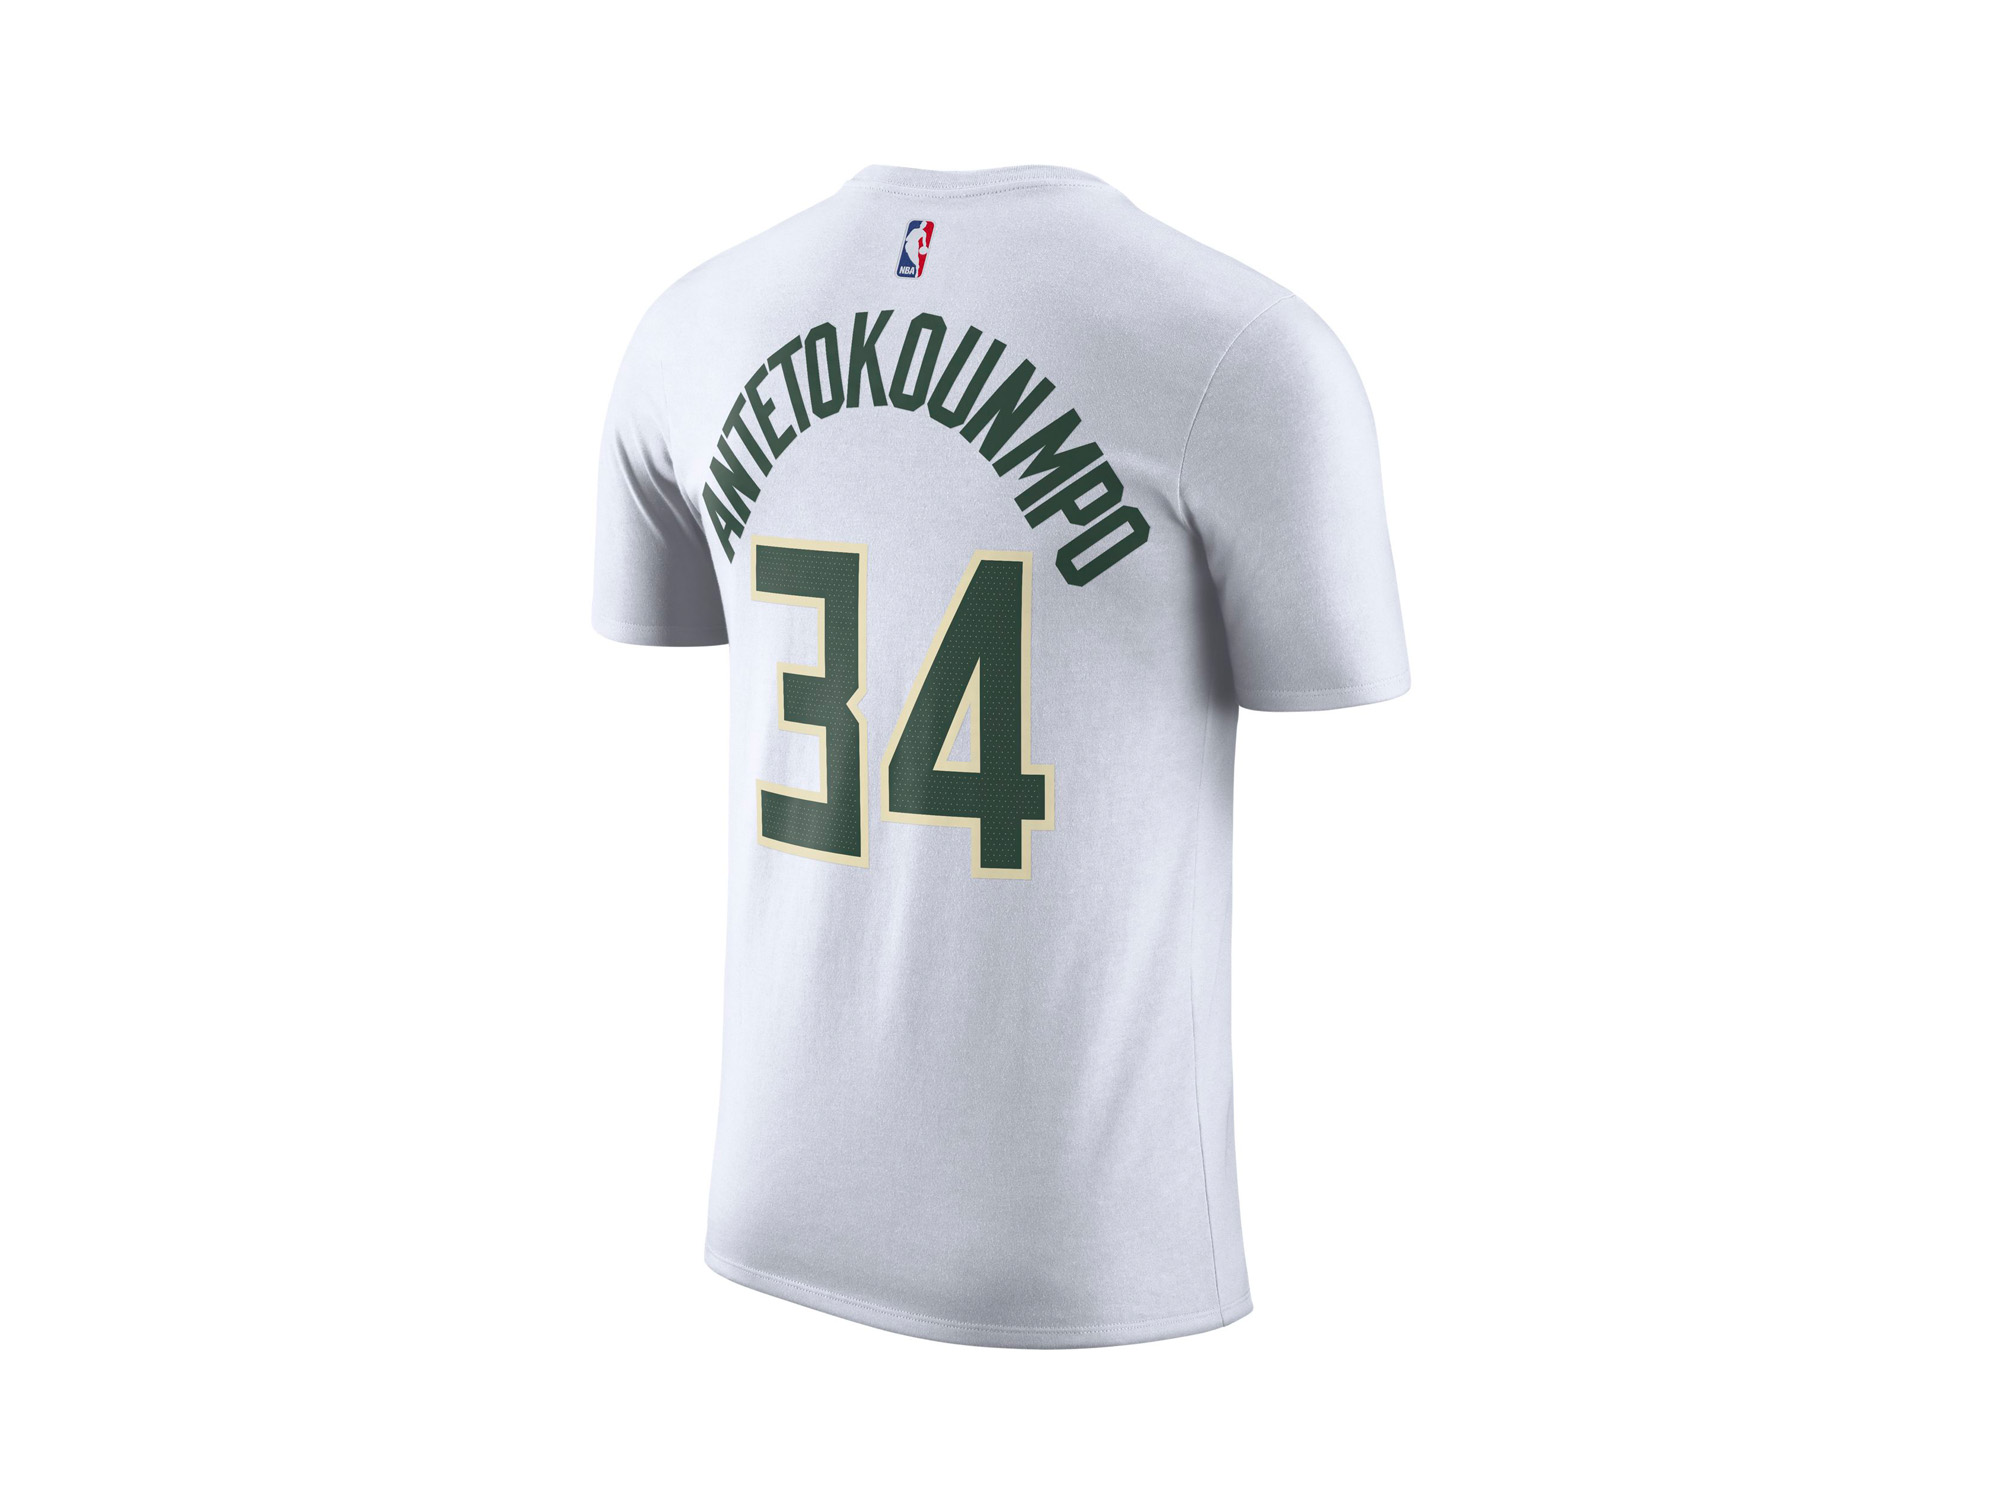 Nike NBA Giannis Antetokounnmpo T-Shirt